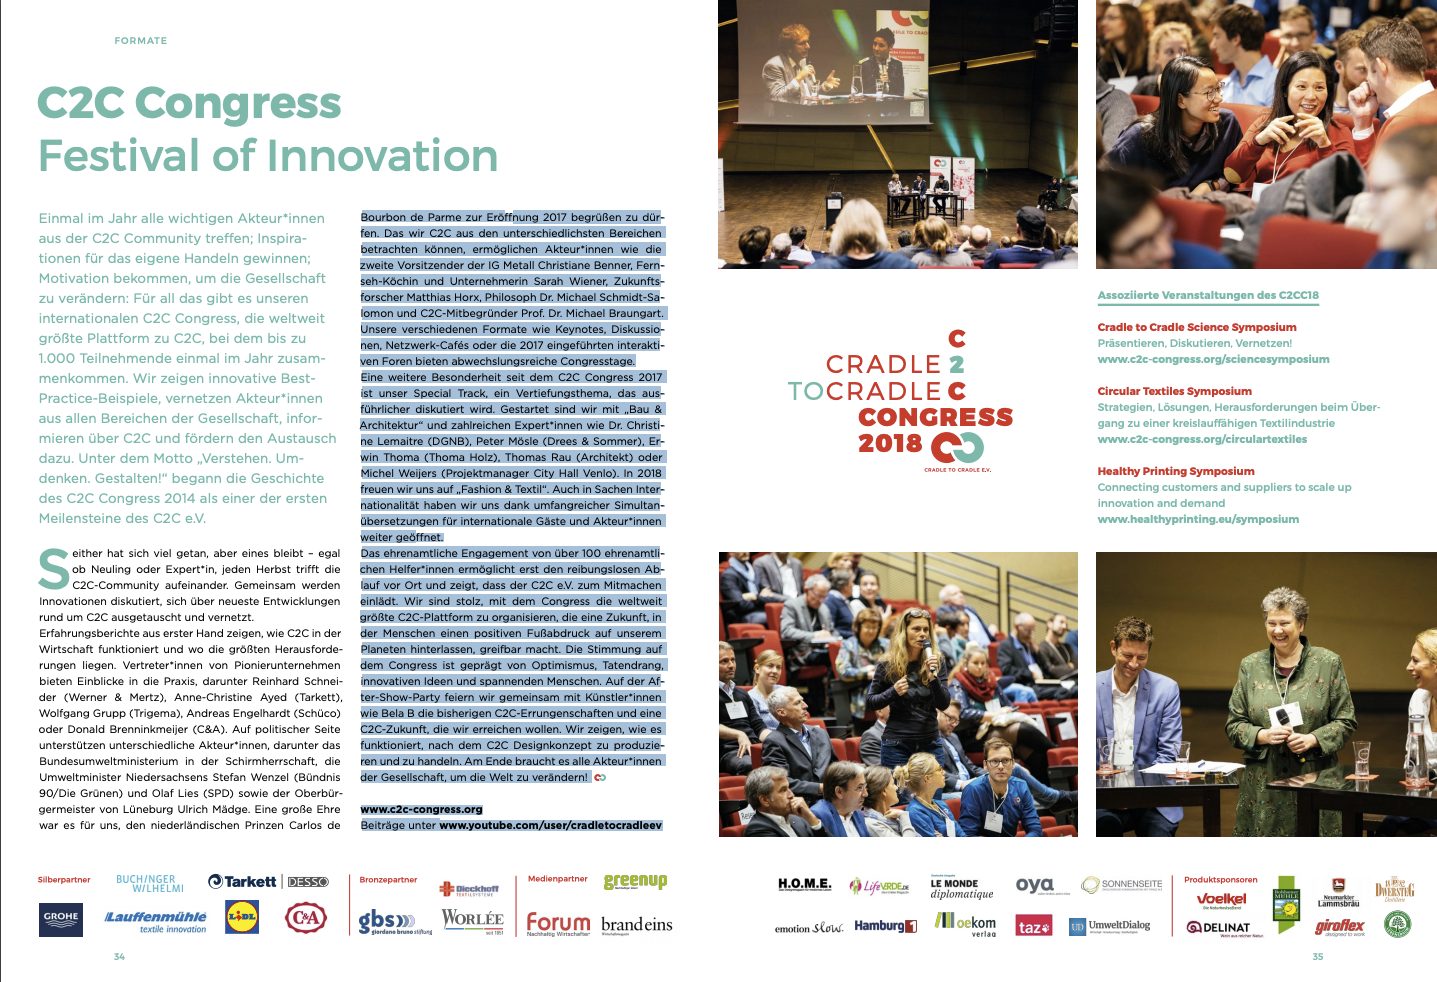 C2C Congress - Festival of Innovation